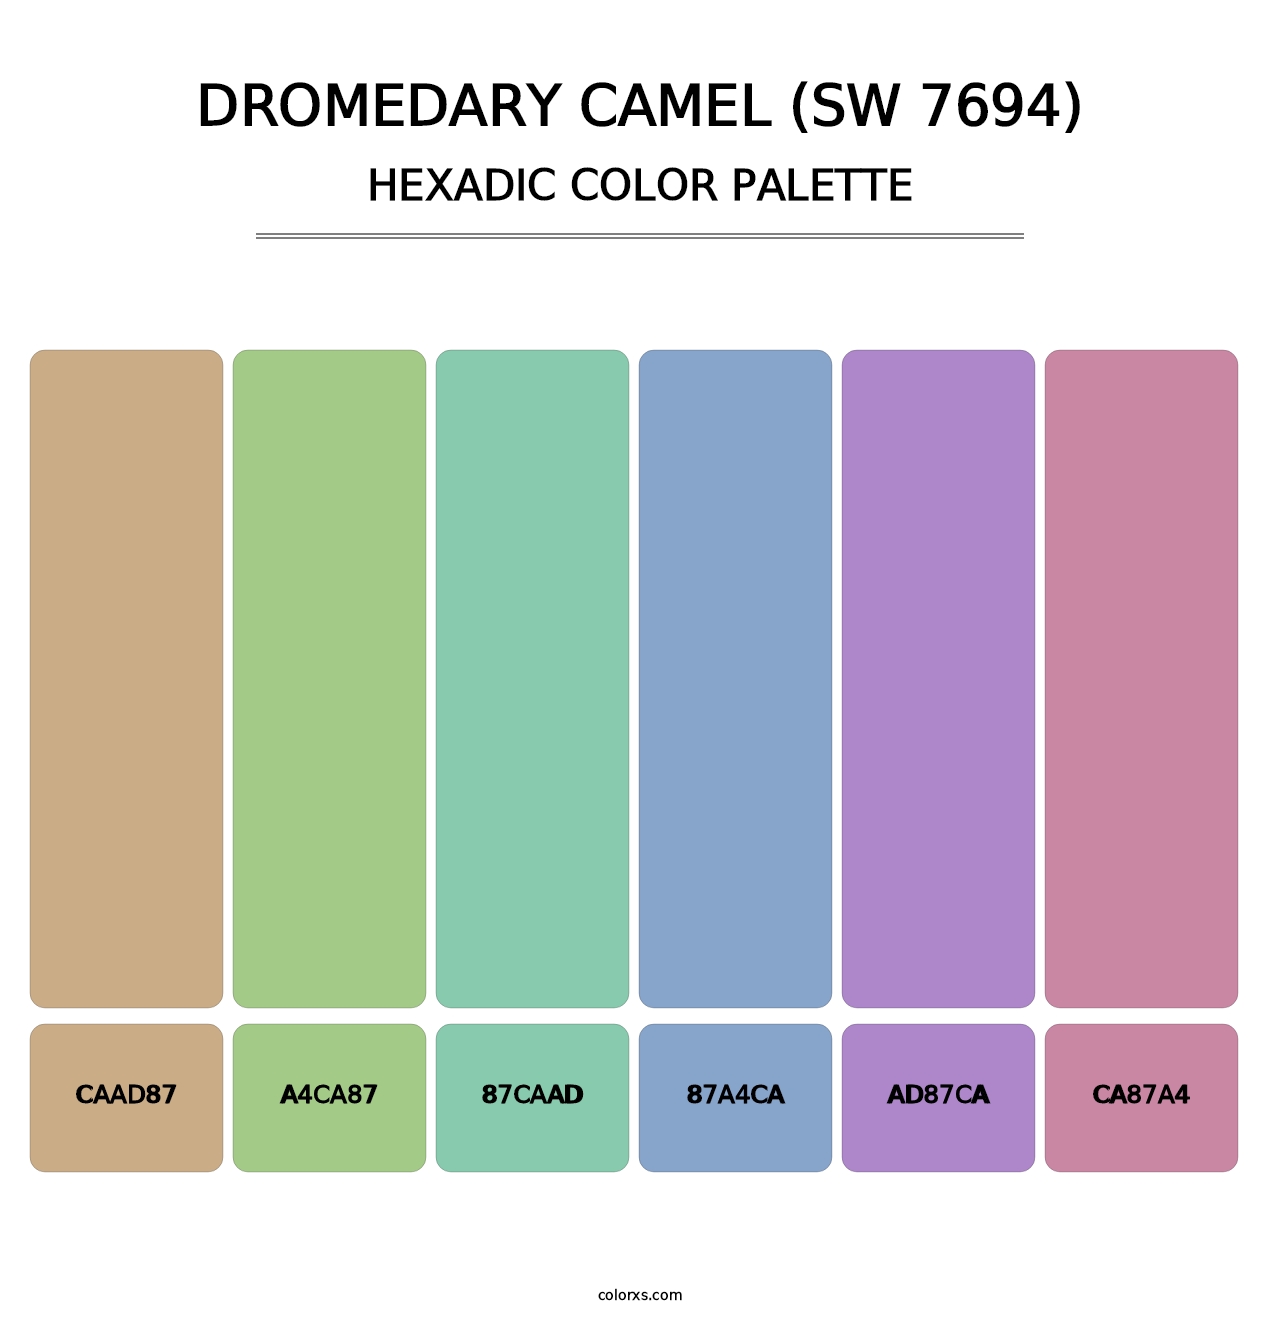 Dromedary Camel (SW 7694) - Hexadic Color Palette